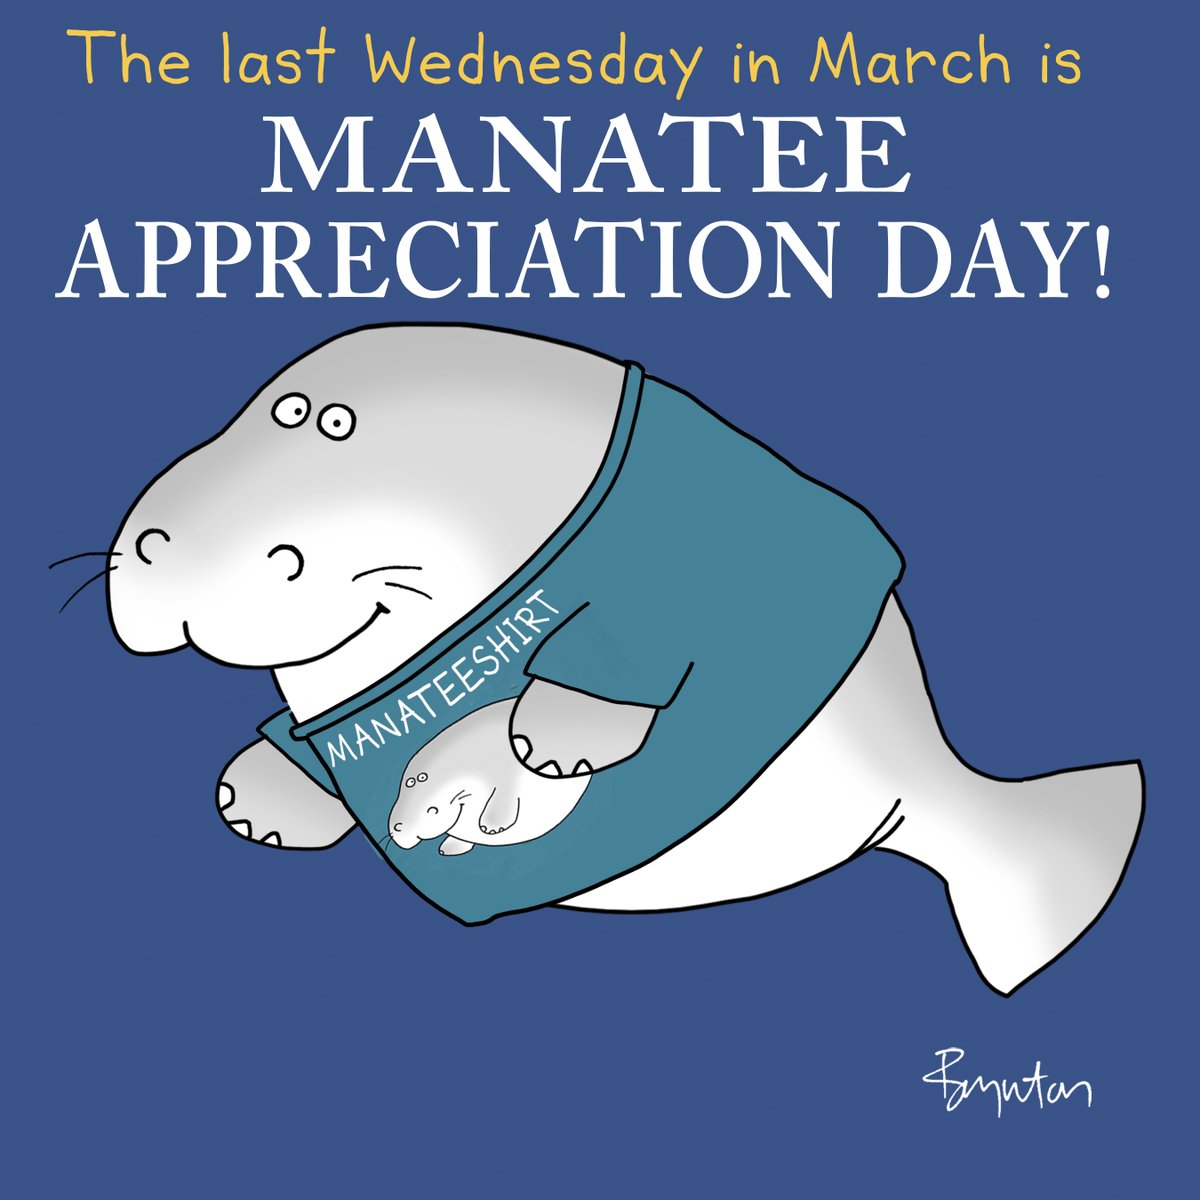 And who among us has not failed to adequately appreciate manatees? #ManateeAppreciationDay